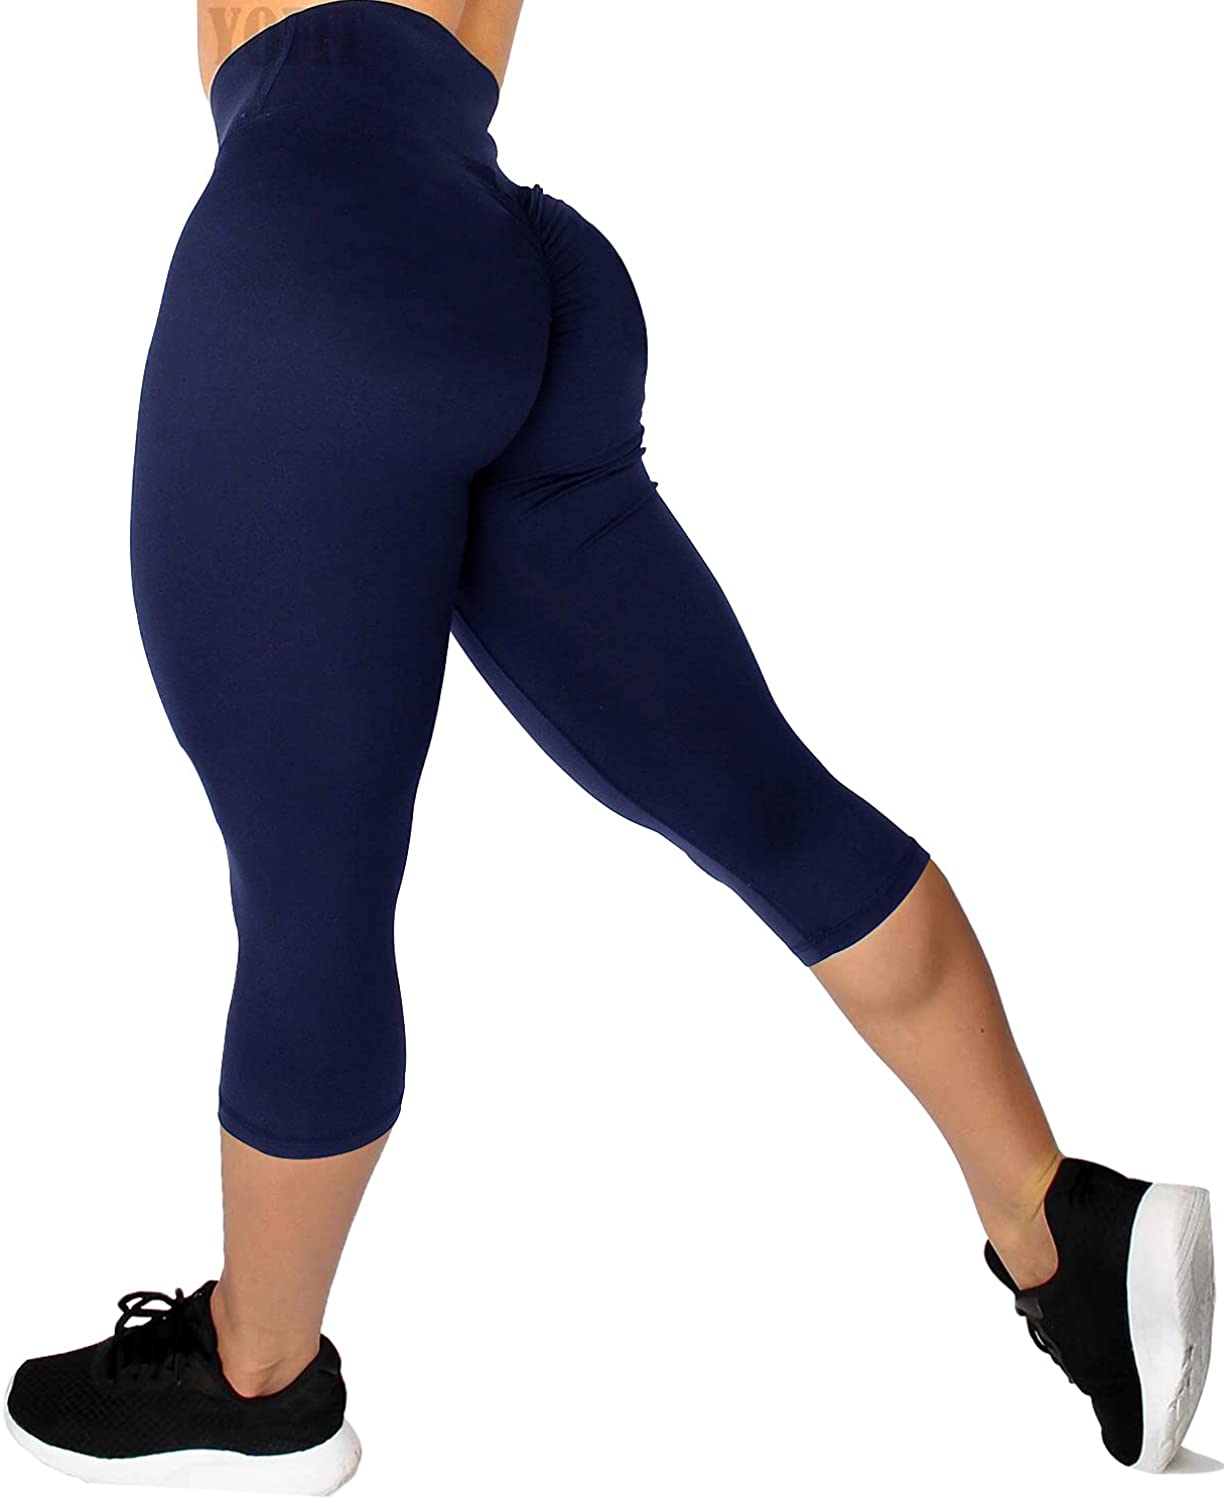 Butt Lifting Capri Legging For Women - High Waist Yoga Pants Gym Workout  Booty Scrunch Tights Novelty Leggings Navy Blue Large-X-Large